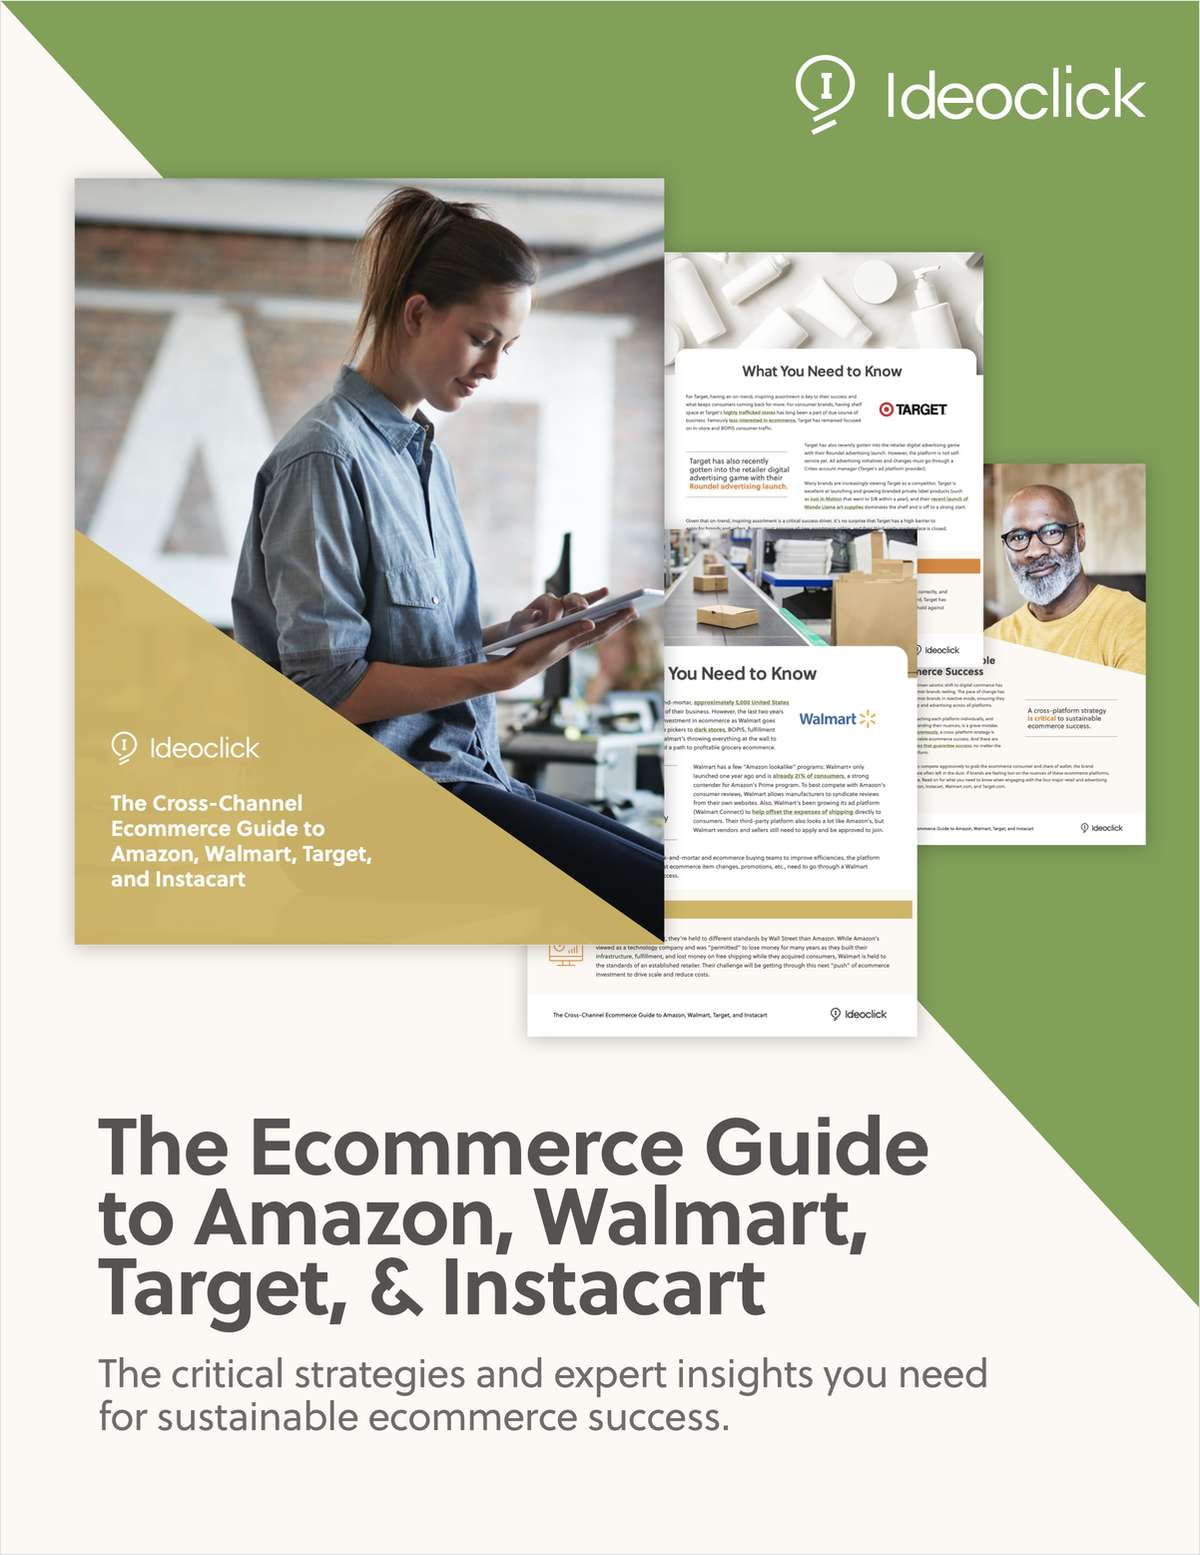 The Ecommerce Guide to Amazon, Walmart, Target, & Instacart